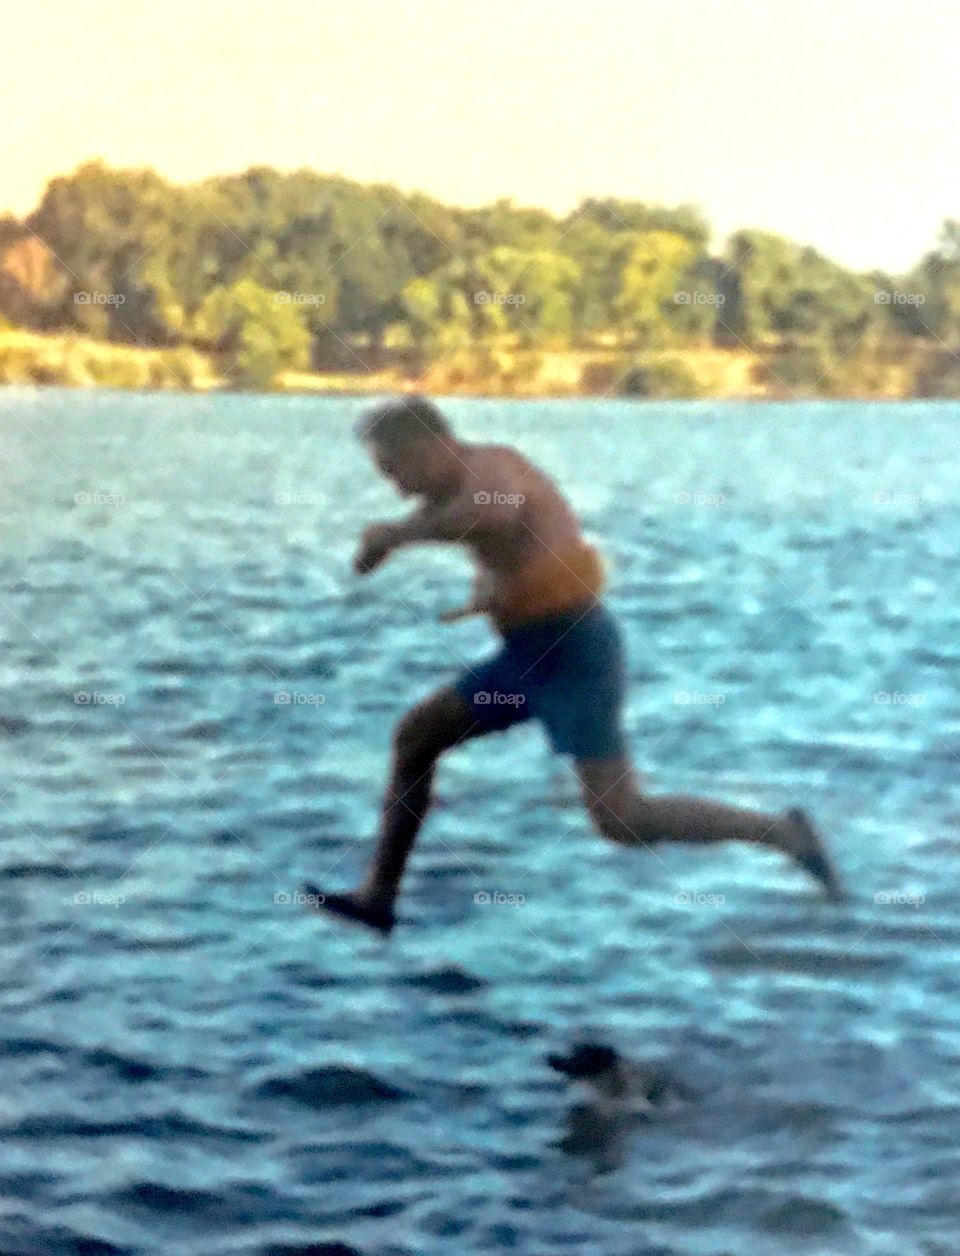 Running on Water